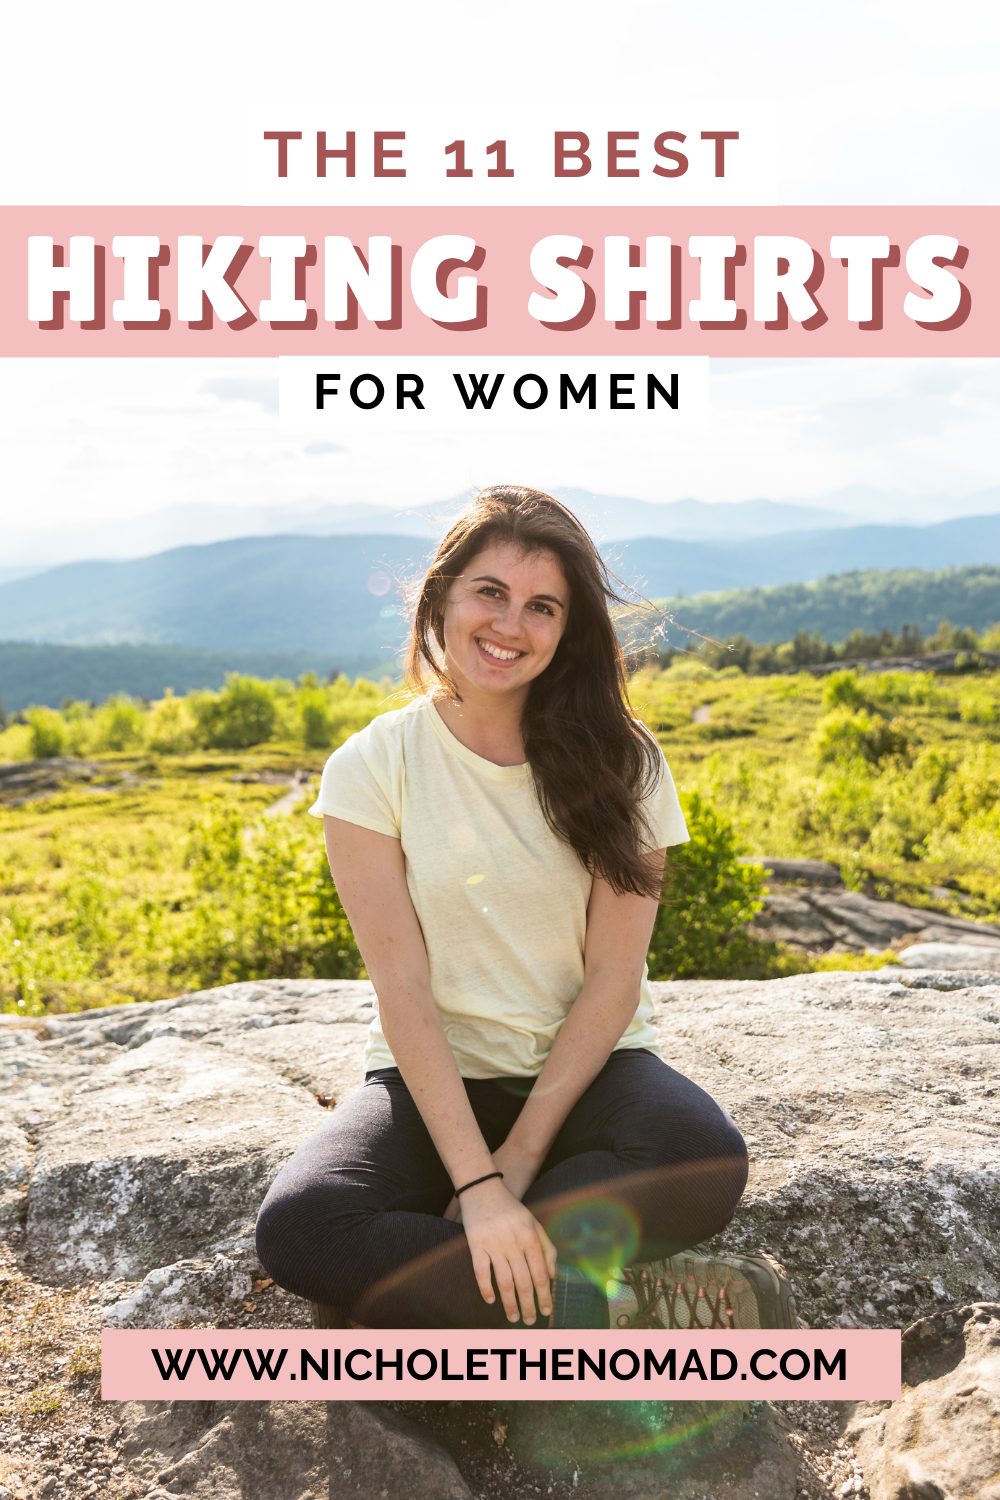 https://images.squarespace-cdn.com/content/v1/5bad2c26d74562245b63d094/1631731202372-9F9Z5IMEWODL7KU642PB/the+best+hiking+shirts+for+women